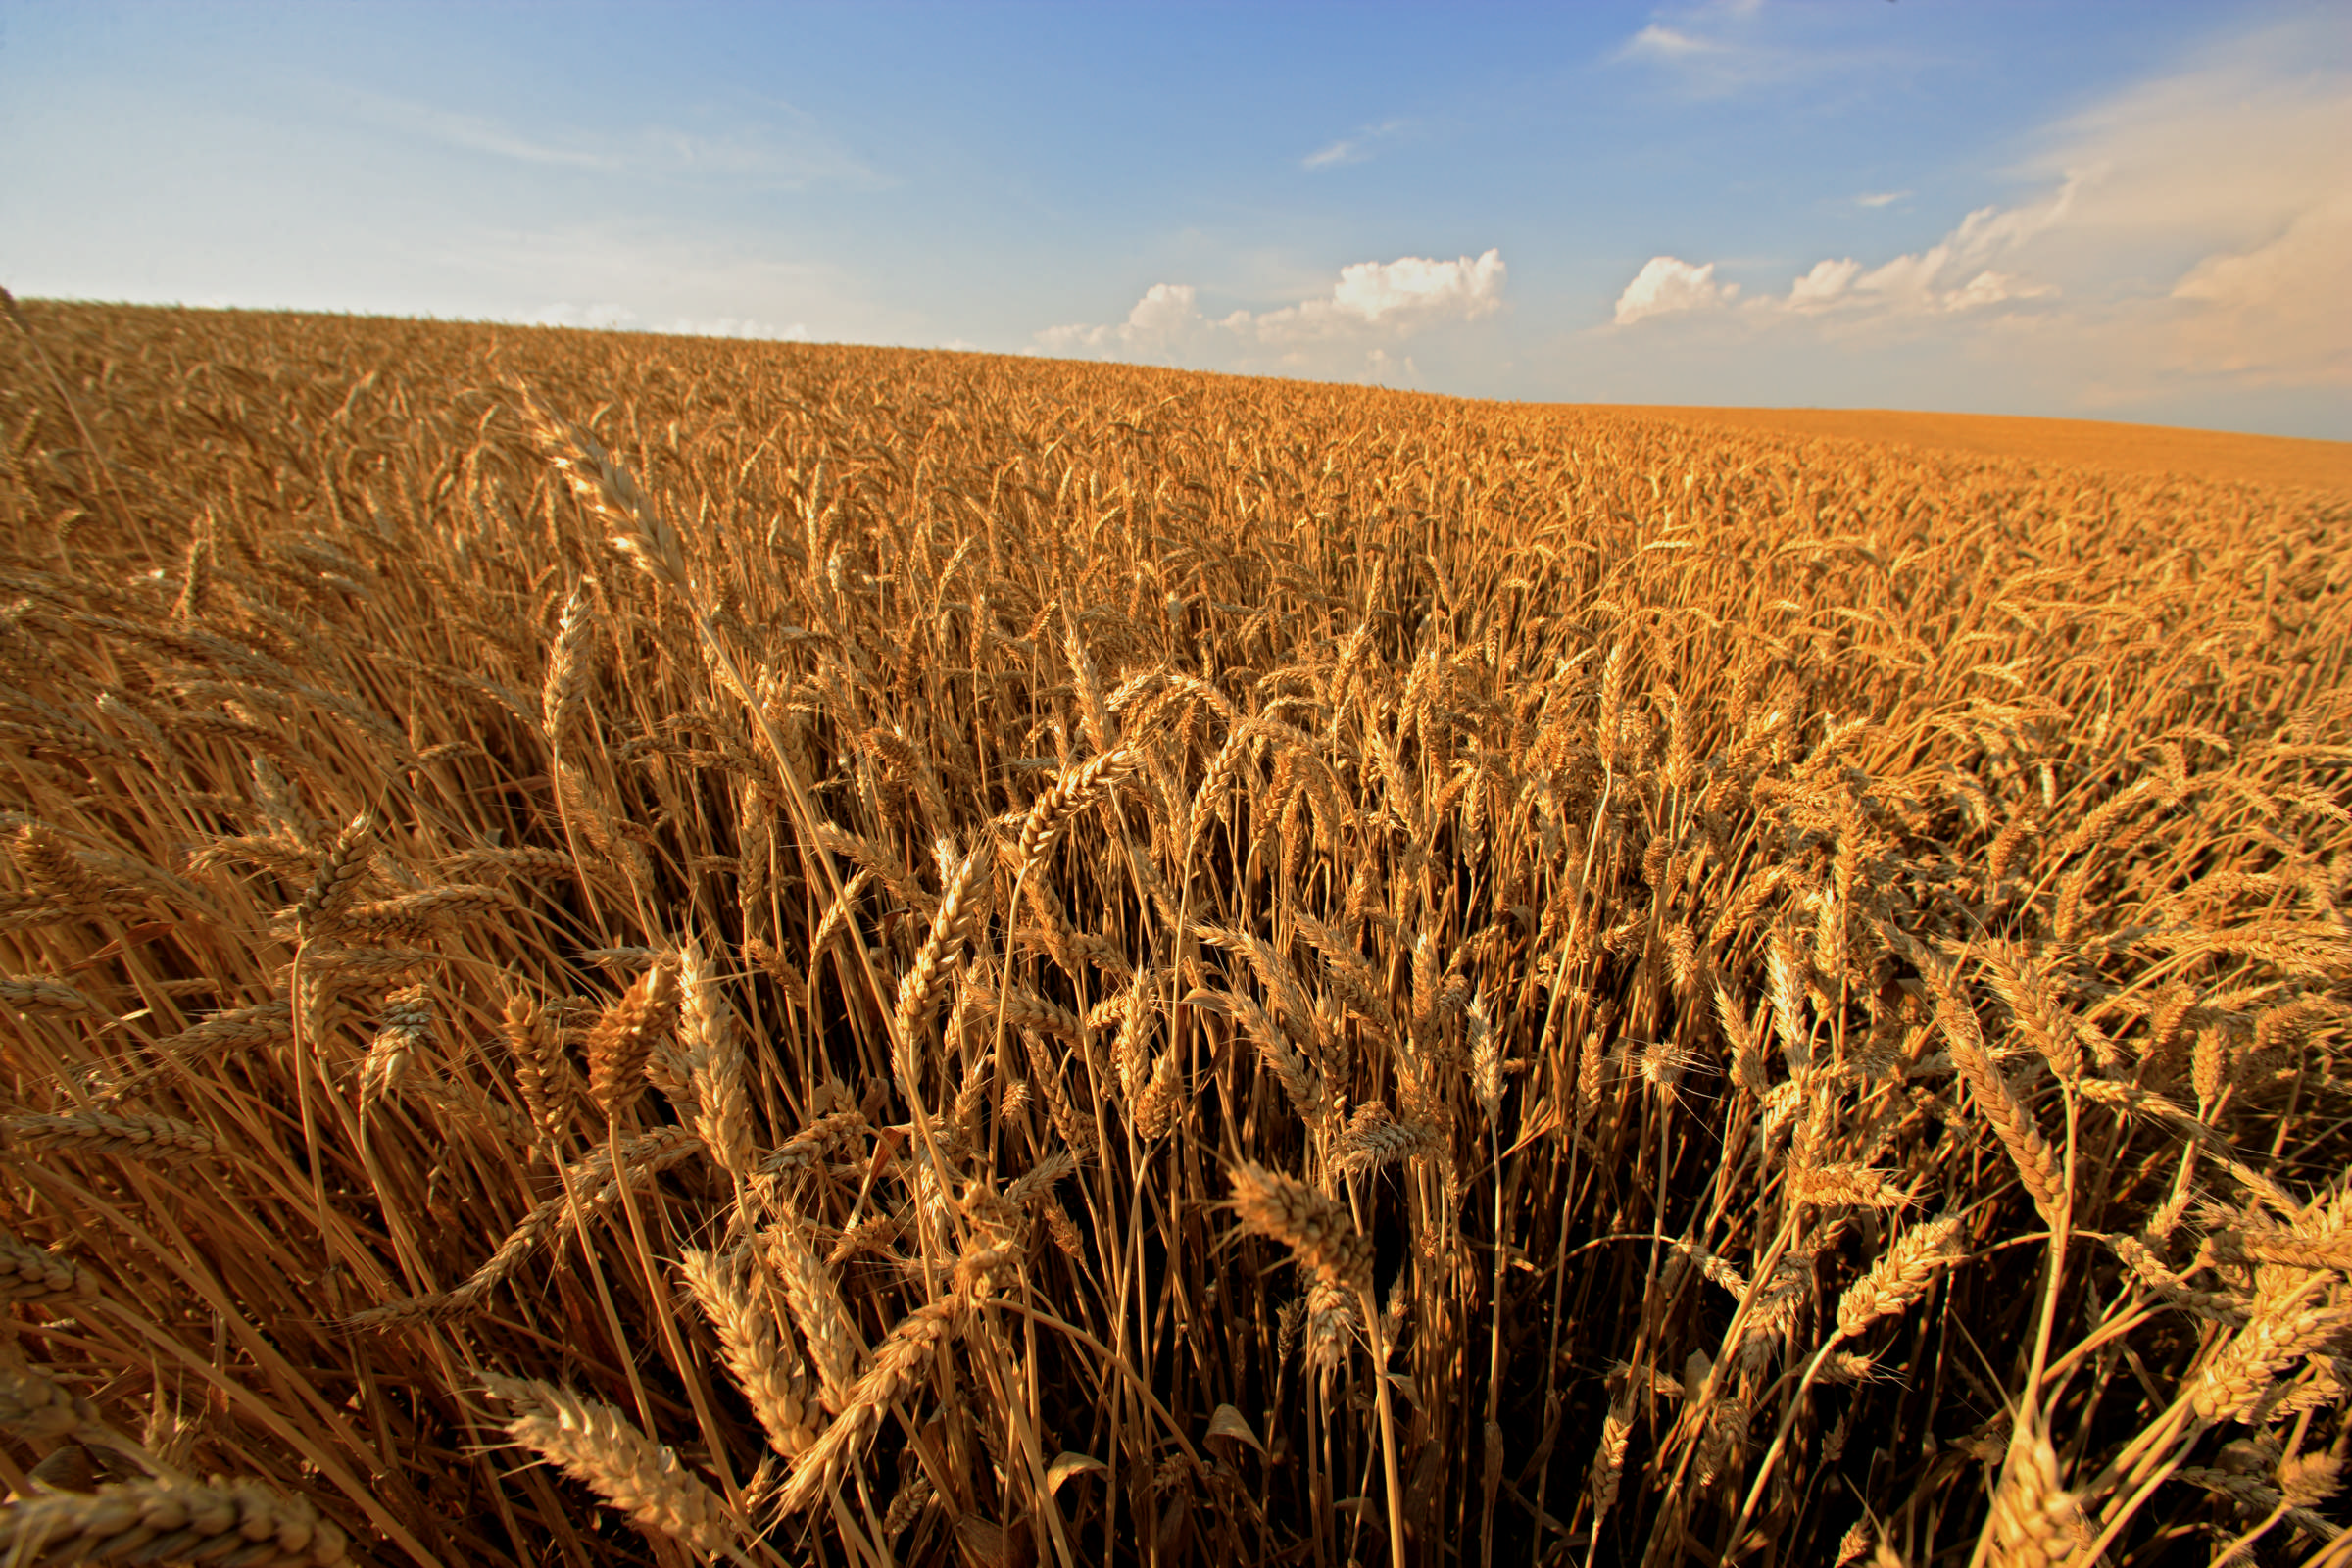 Slavonia & Baranja wheat field